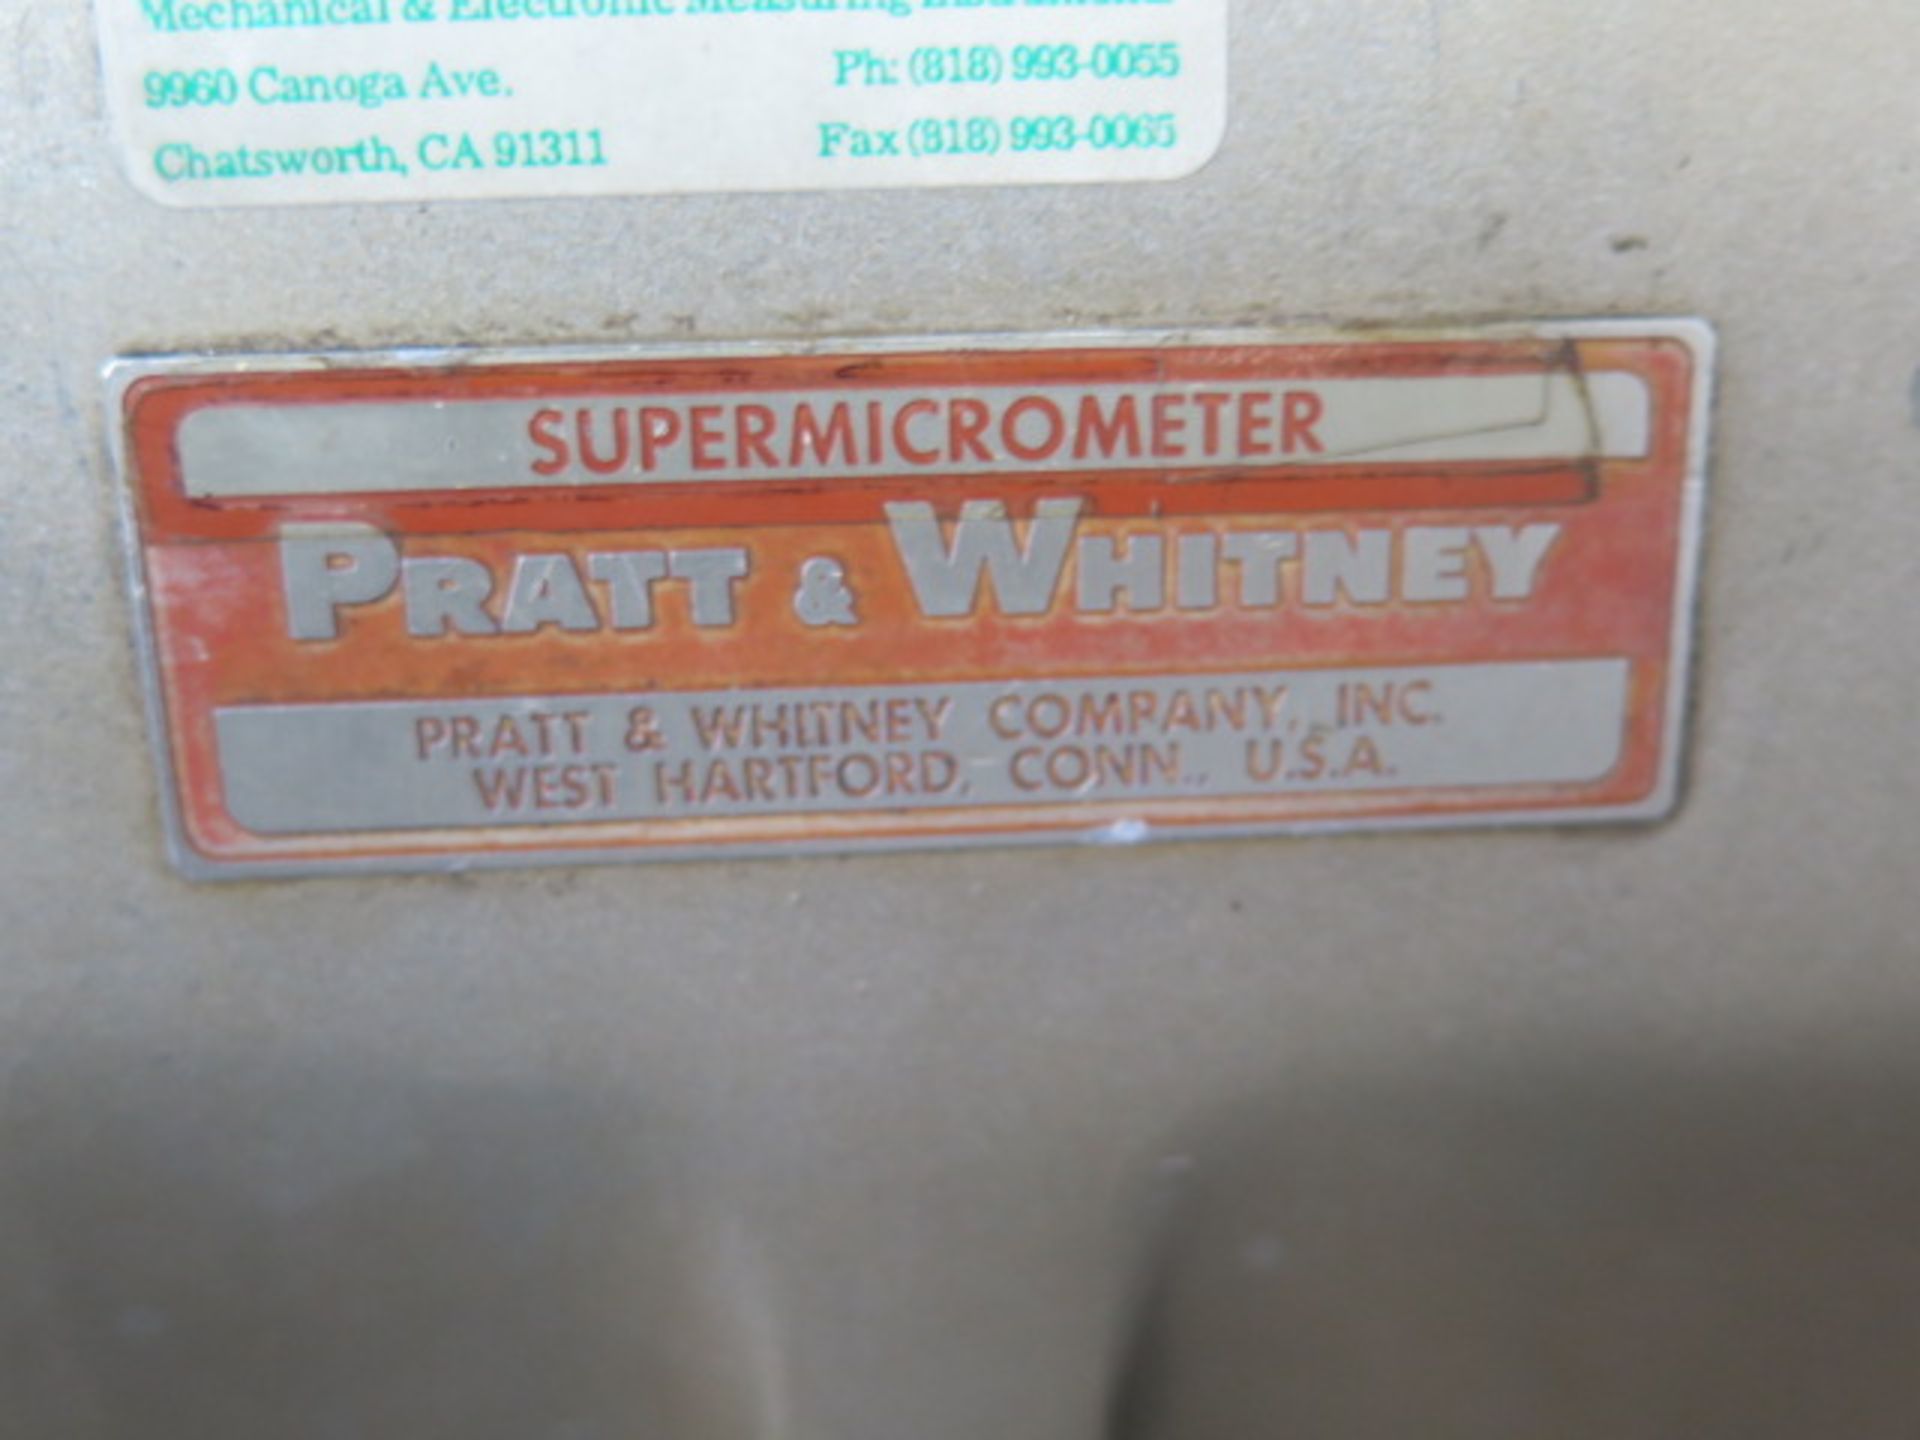 Pratt & Whitney "Electrolimit" Supermicrometer w/ Electronic Readout (SOLD AS-IS - NO WARRANTY) - Image 4 of 11